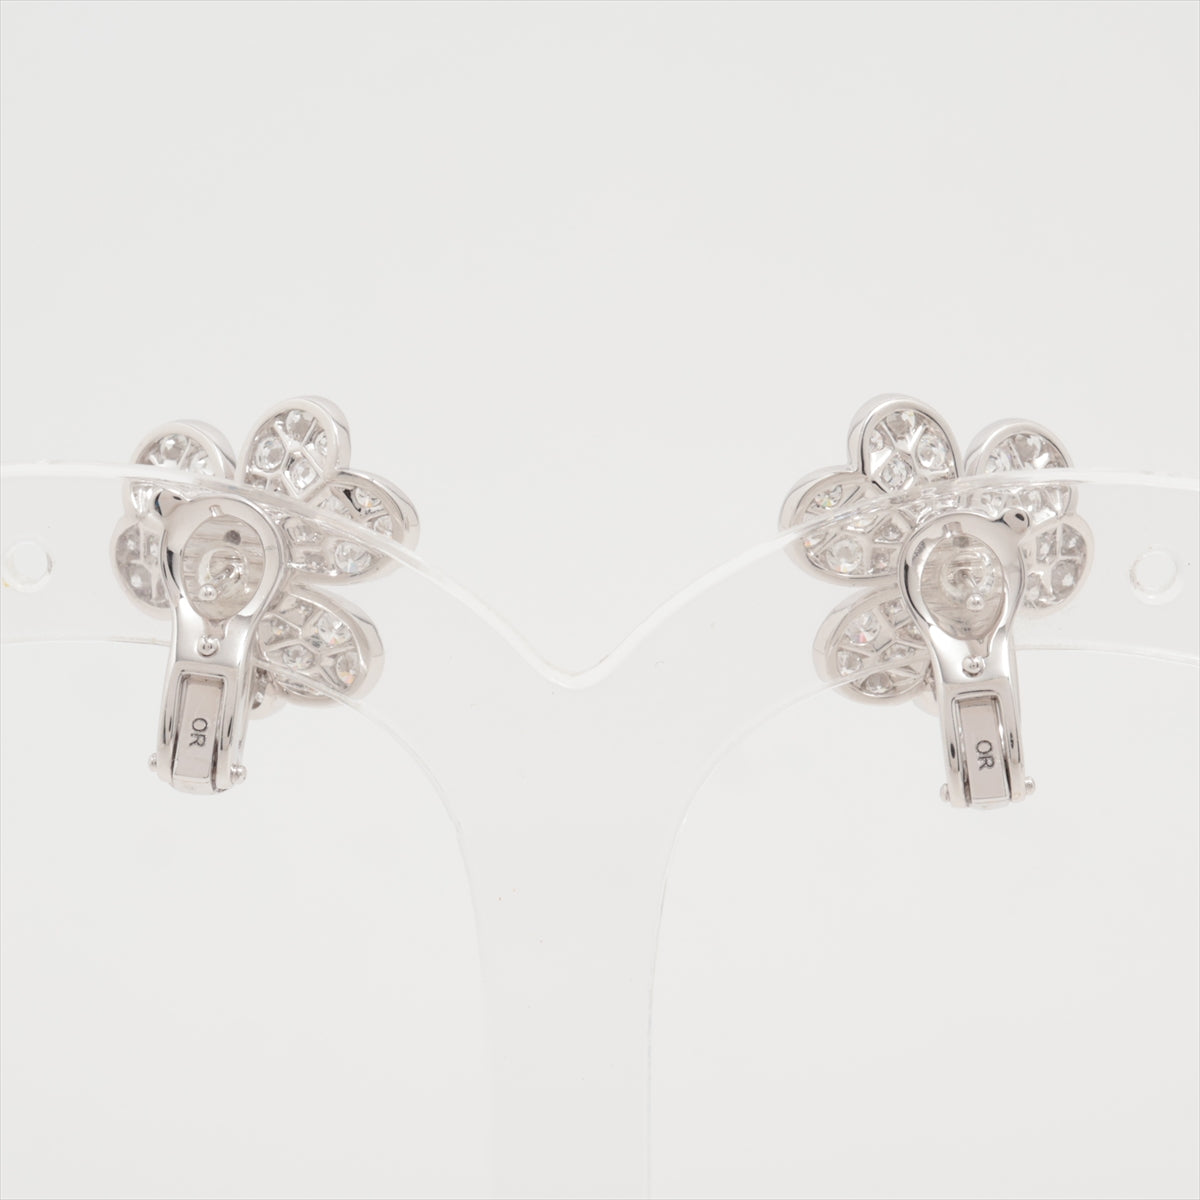 Van Cleef & Arpels Frivole Small diamond Piercing jewelry 750(WG) 8.8g VCARB65800